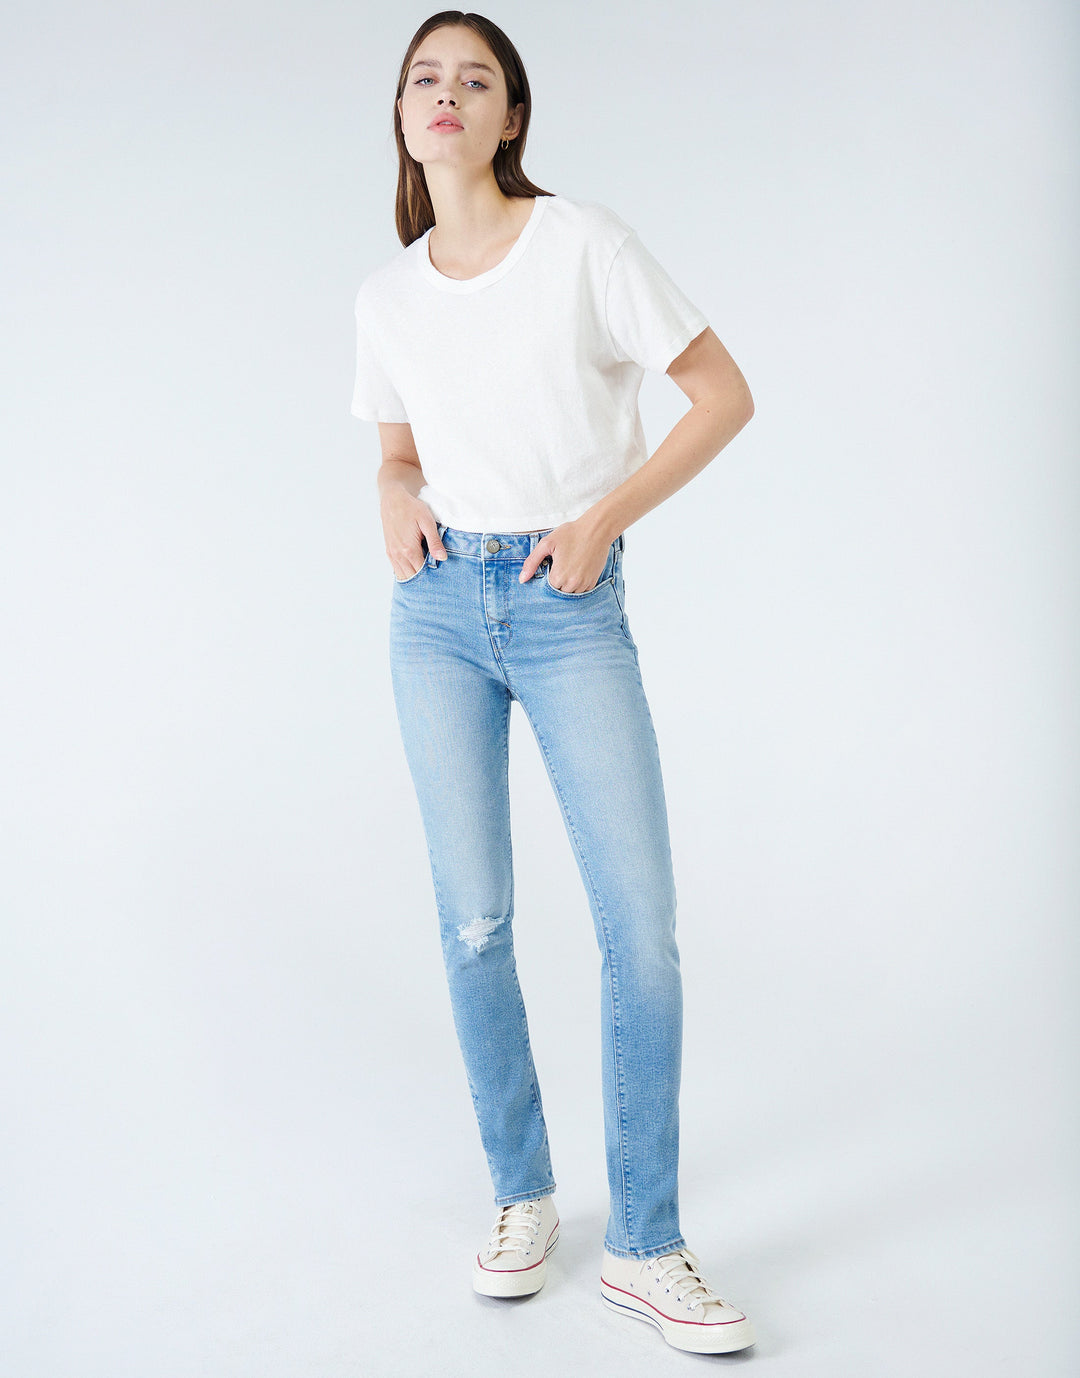 Pantalon skinny taille haute Olivia - Ryder | Inédit - Liquidation